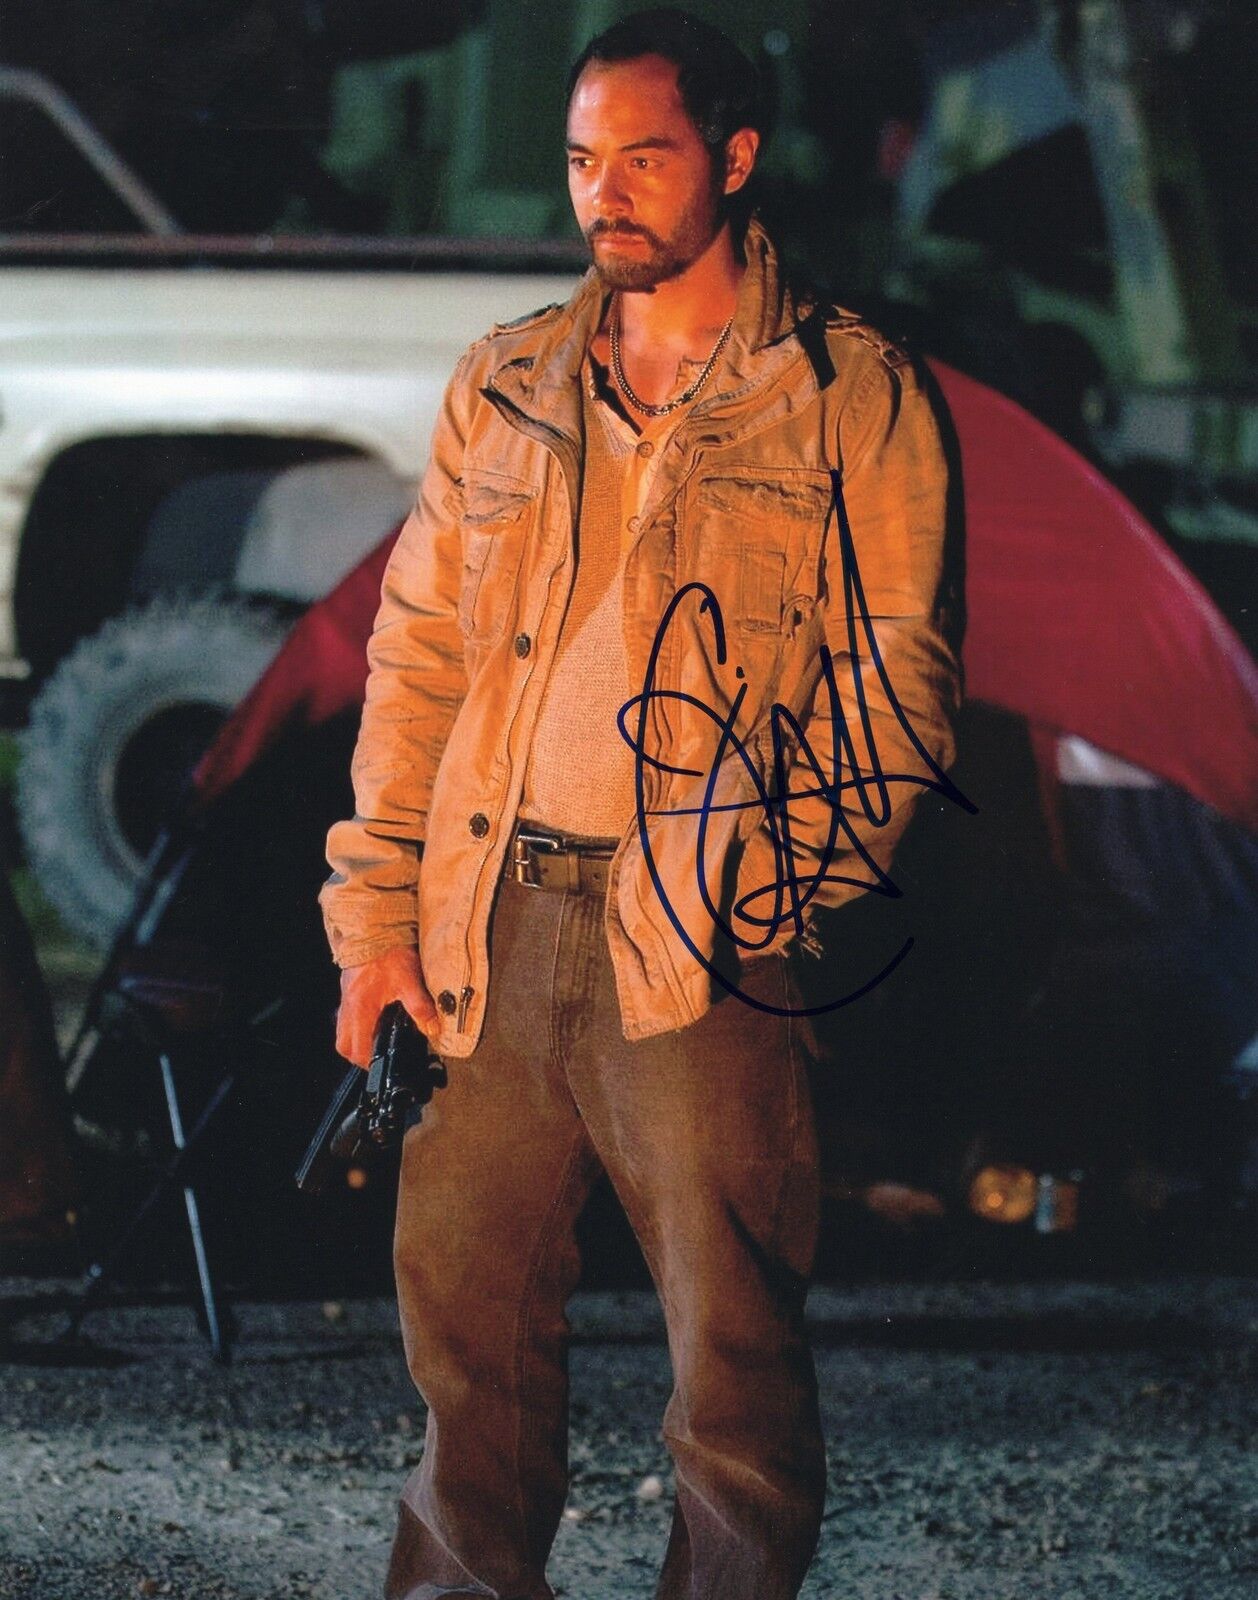 Jose Pablo Cantillo The Walking Dead Caesar Martinez Signed 8x10 Photo Poster painting w/COA #15